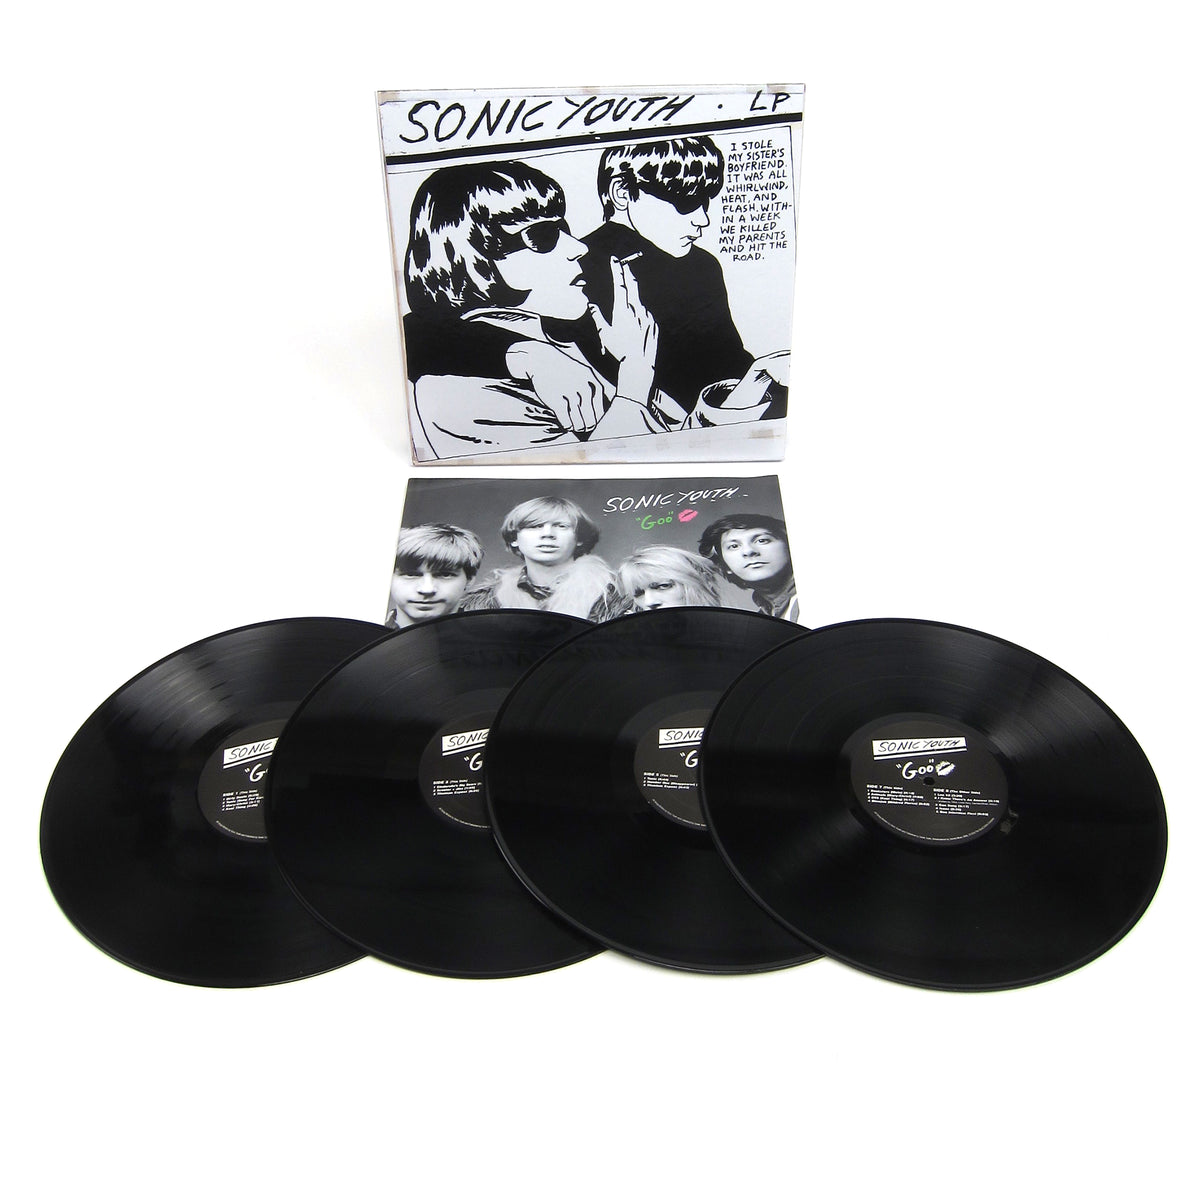 Goo (Sonic Youth) Vinyle 33 tours et sa pochette sérigra…